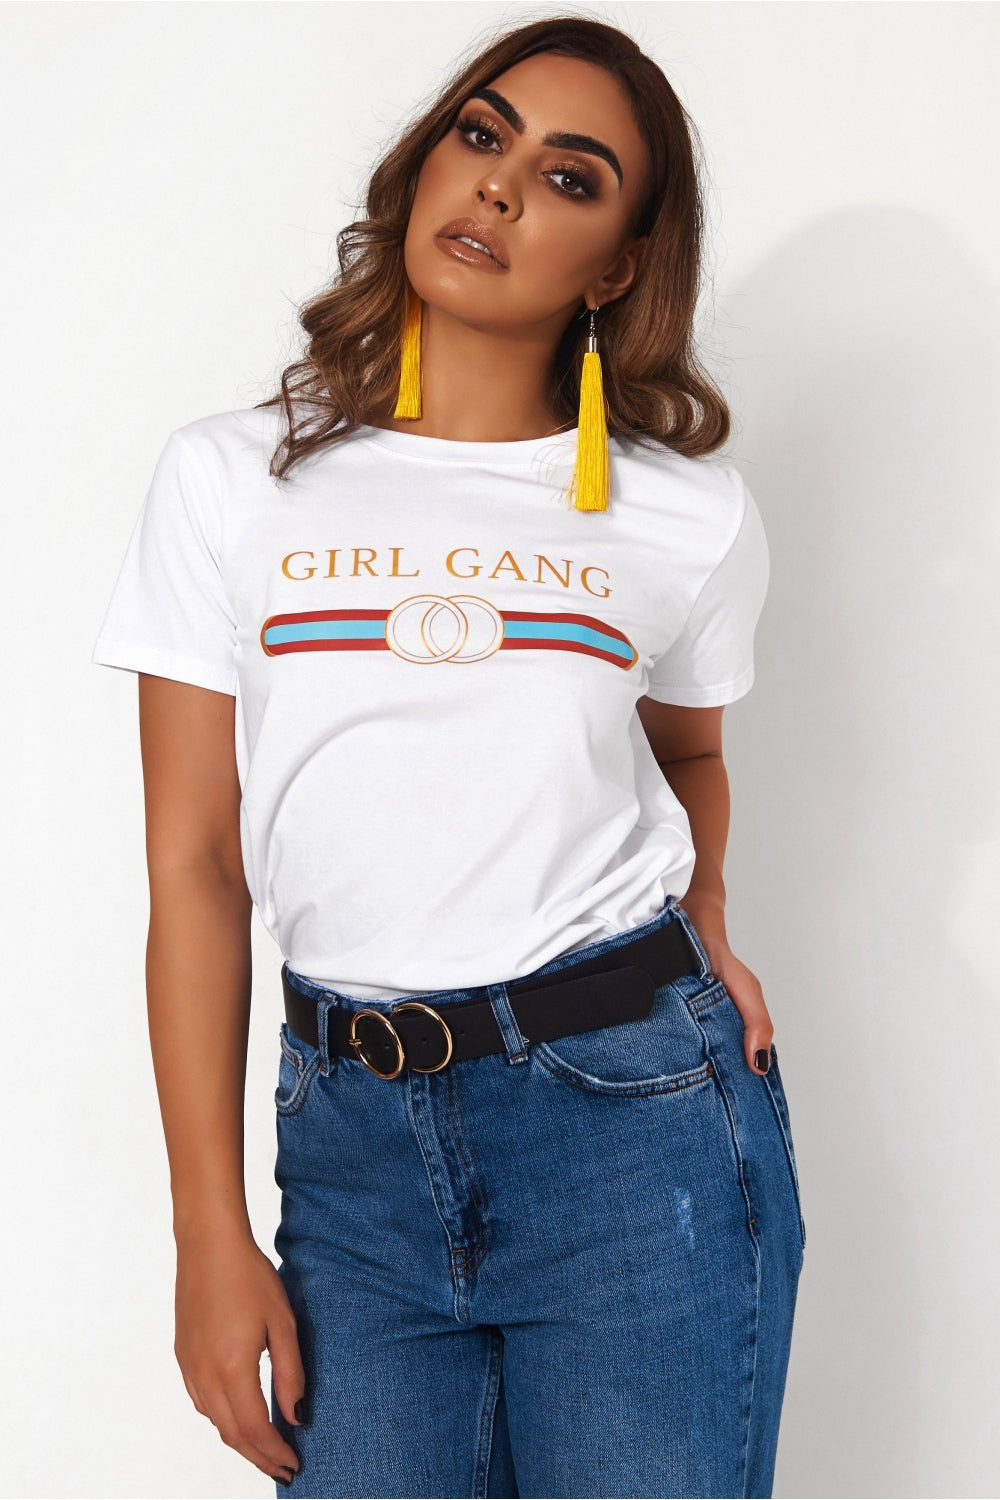 Girl Gang White Slogan T-Shirt